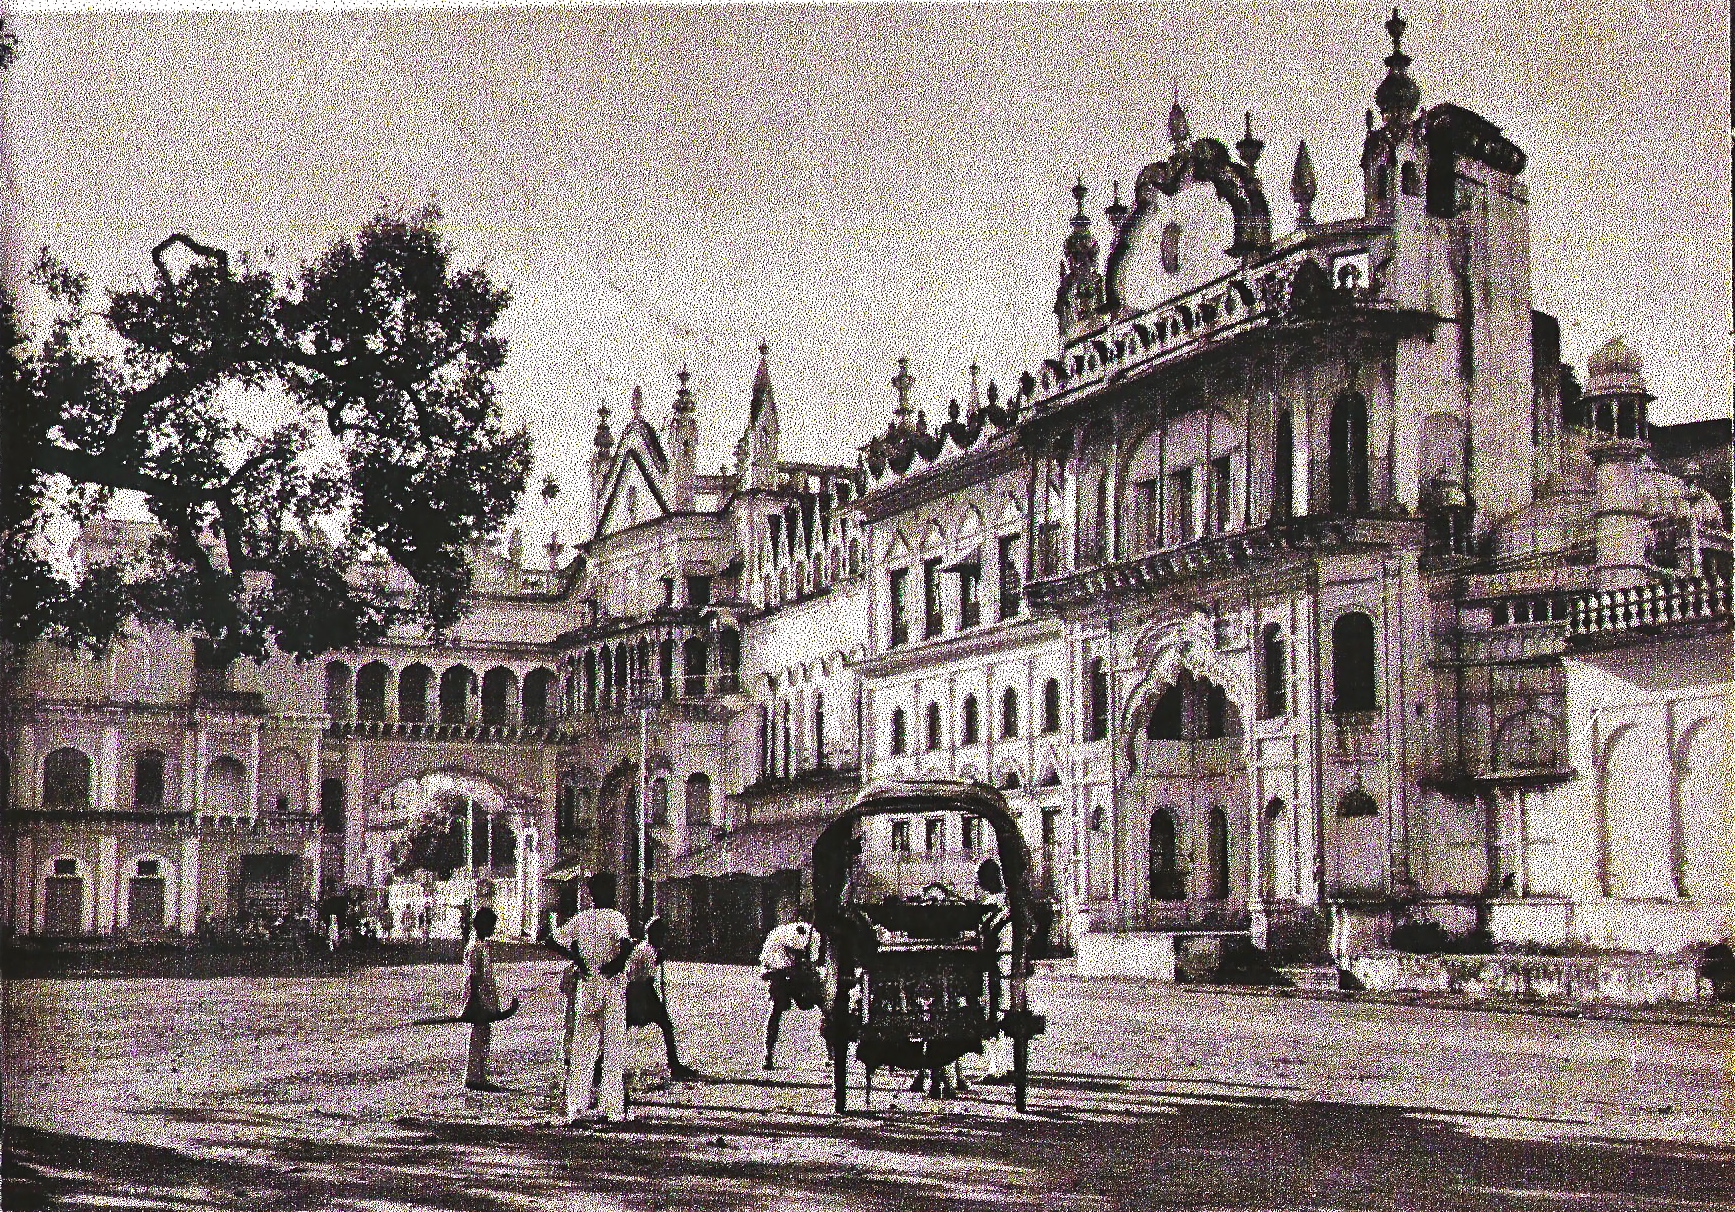 SHoukat Palace the beautiful palace built by Prince Sebastian I Prime Minister of Bhopal